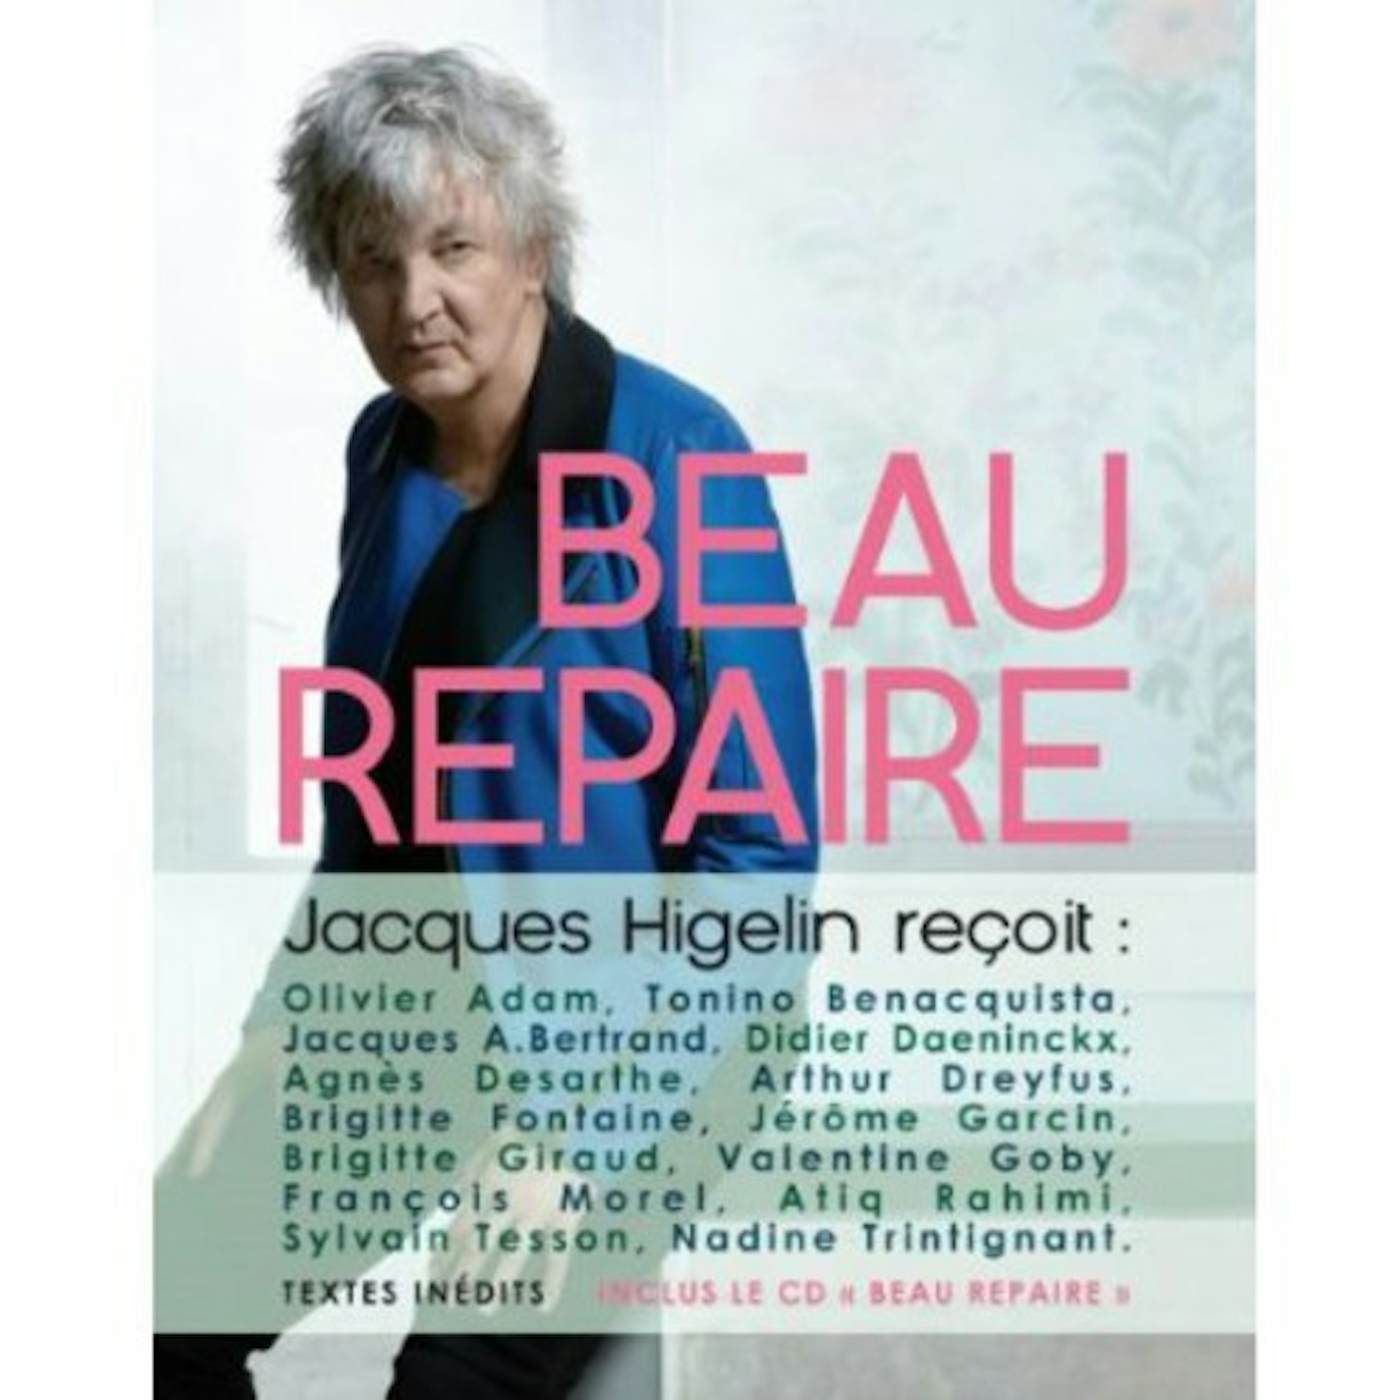 Jacques Higelin BEAU REPAIRE CD